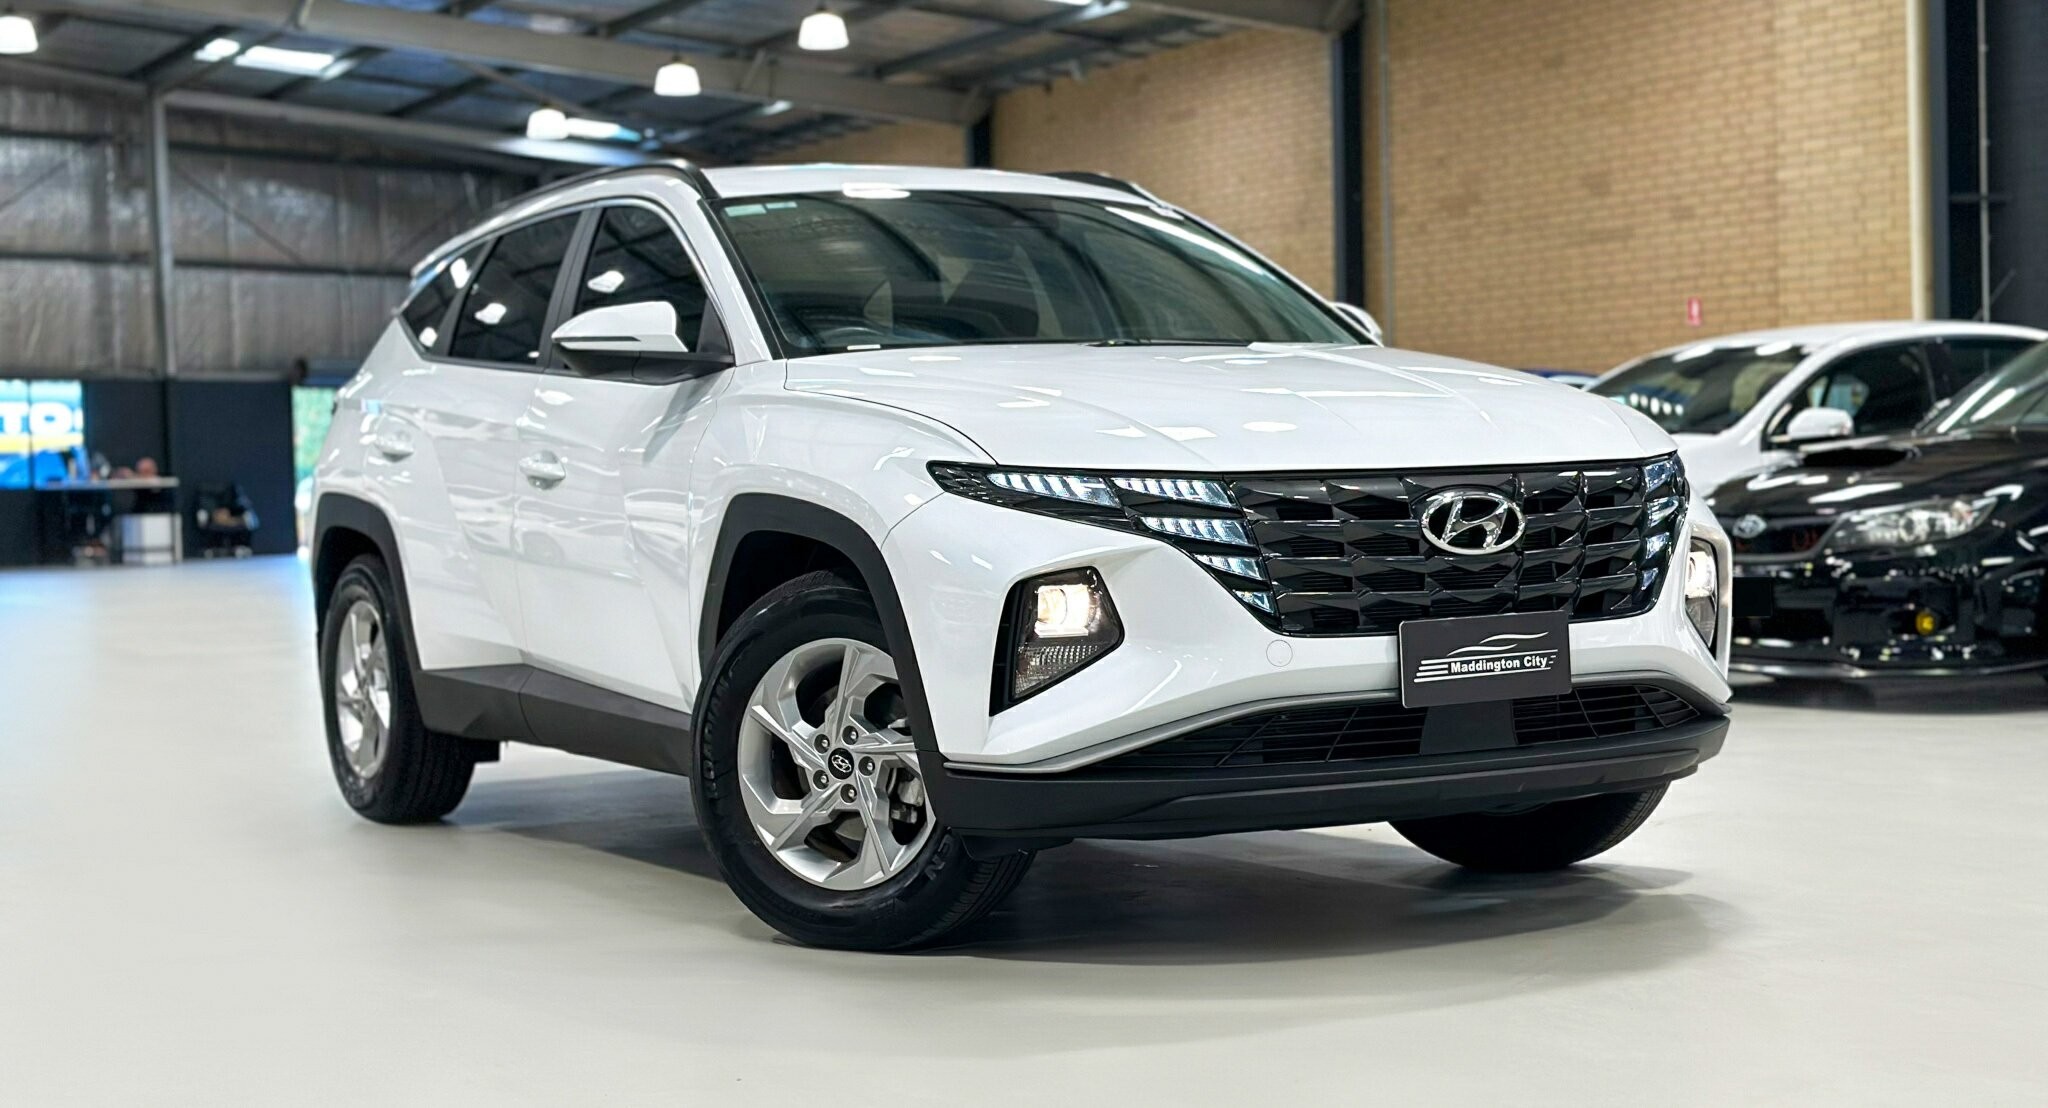 Hyundai Tucson image 1